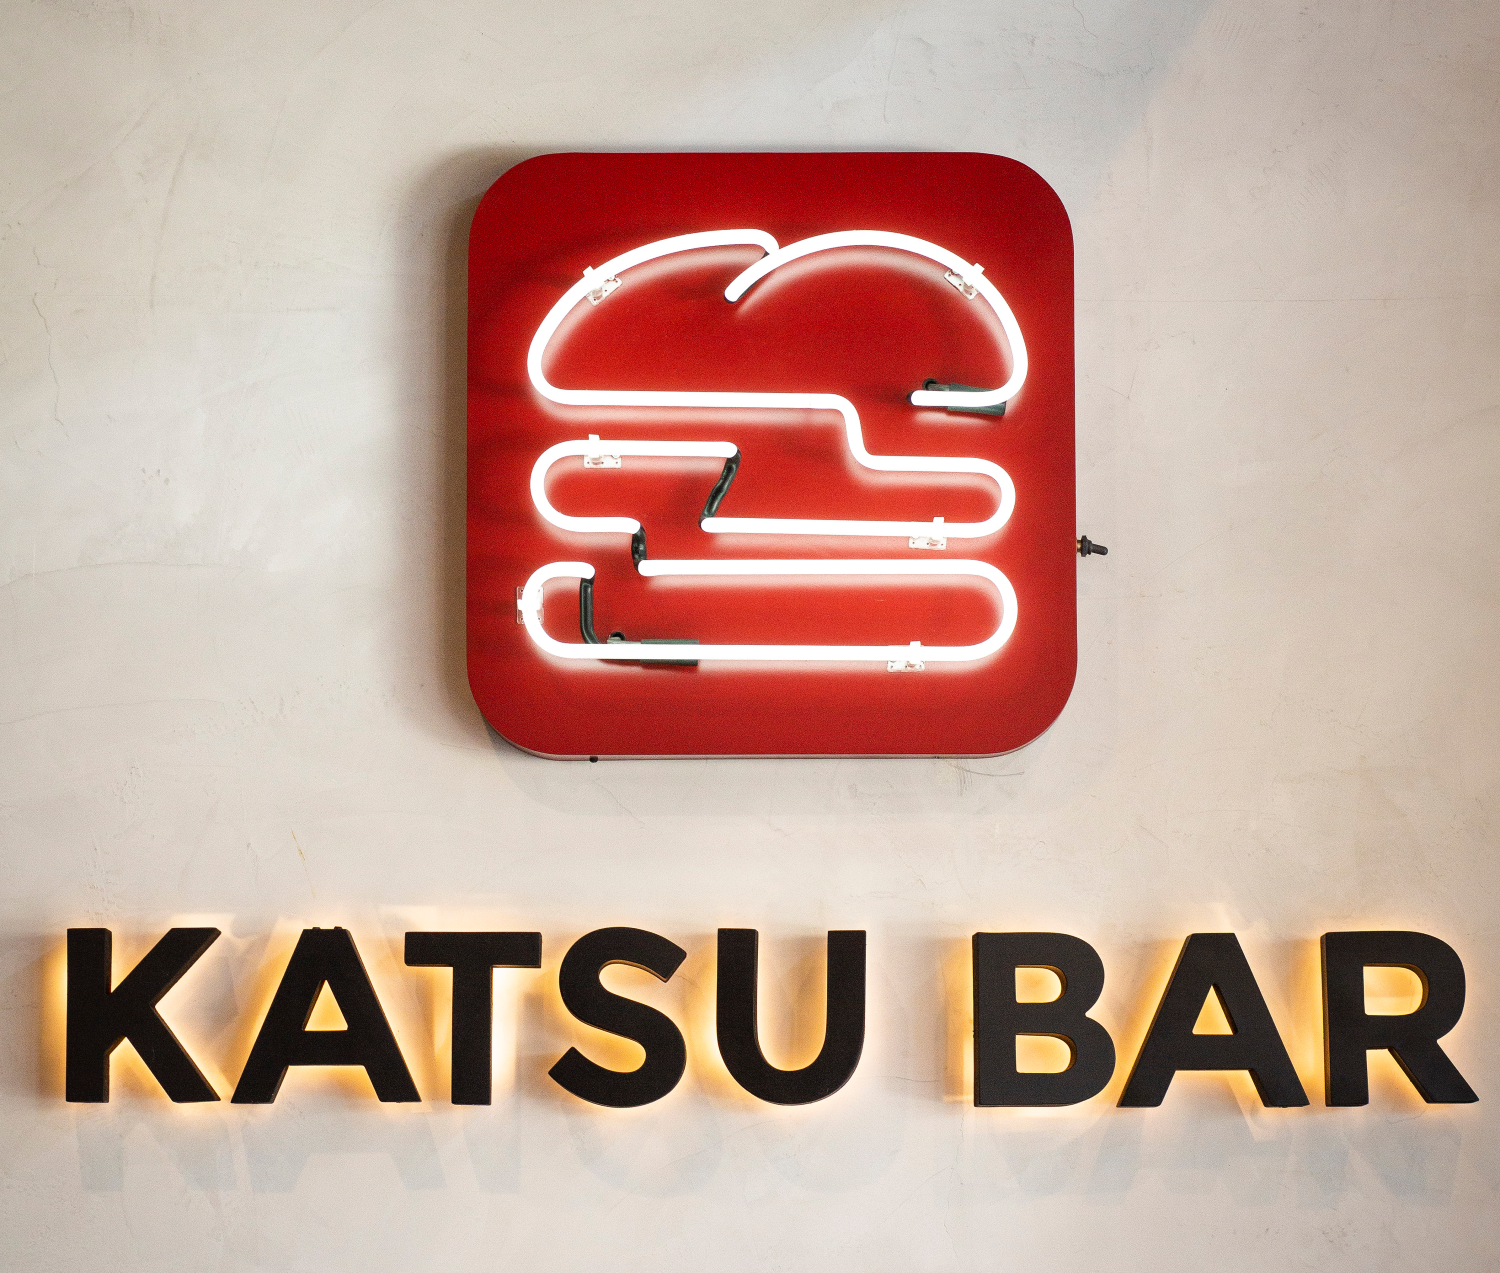 Katsu Bar Sign with Burger Icon